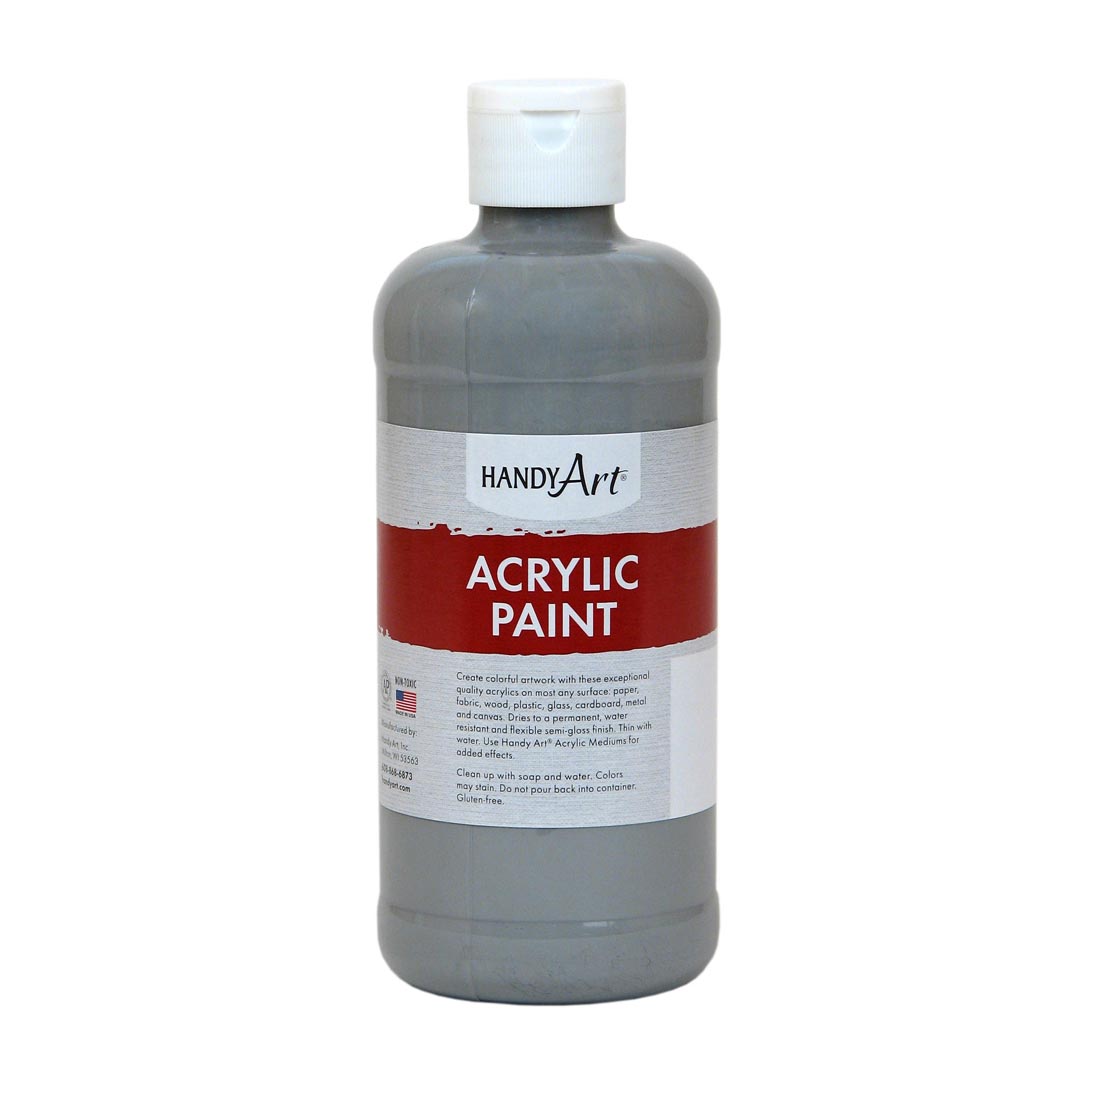 Pint Bottle of Gray Handy Art Acrylic Paint